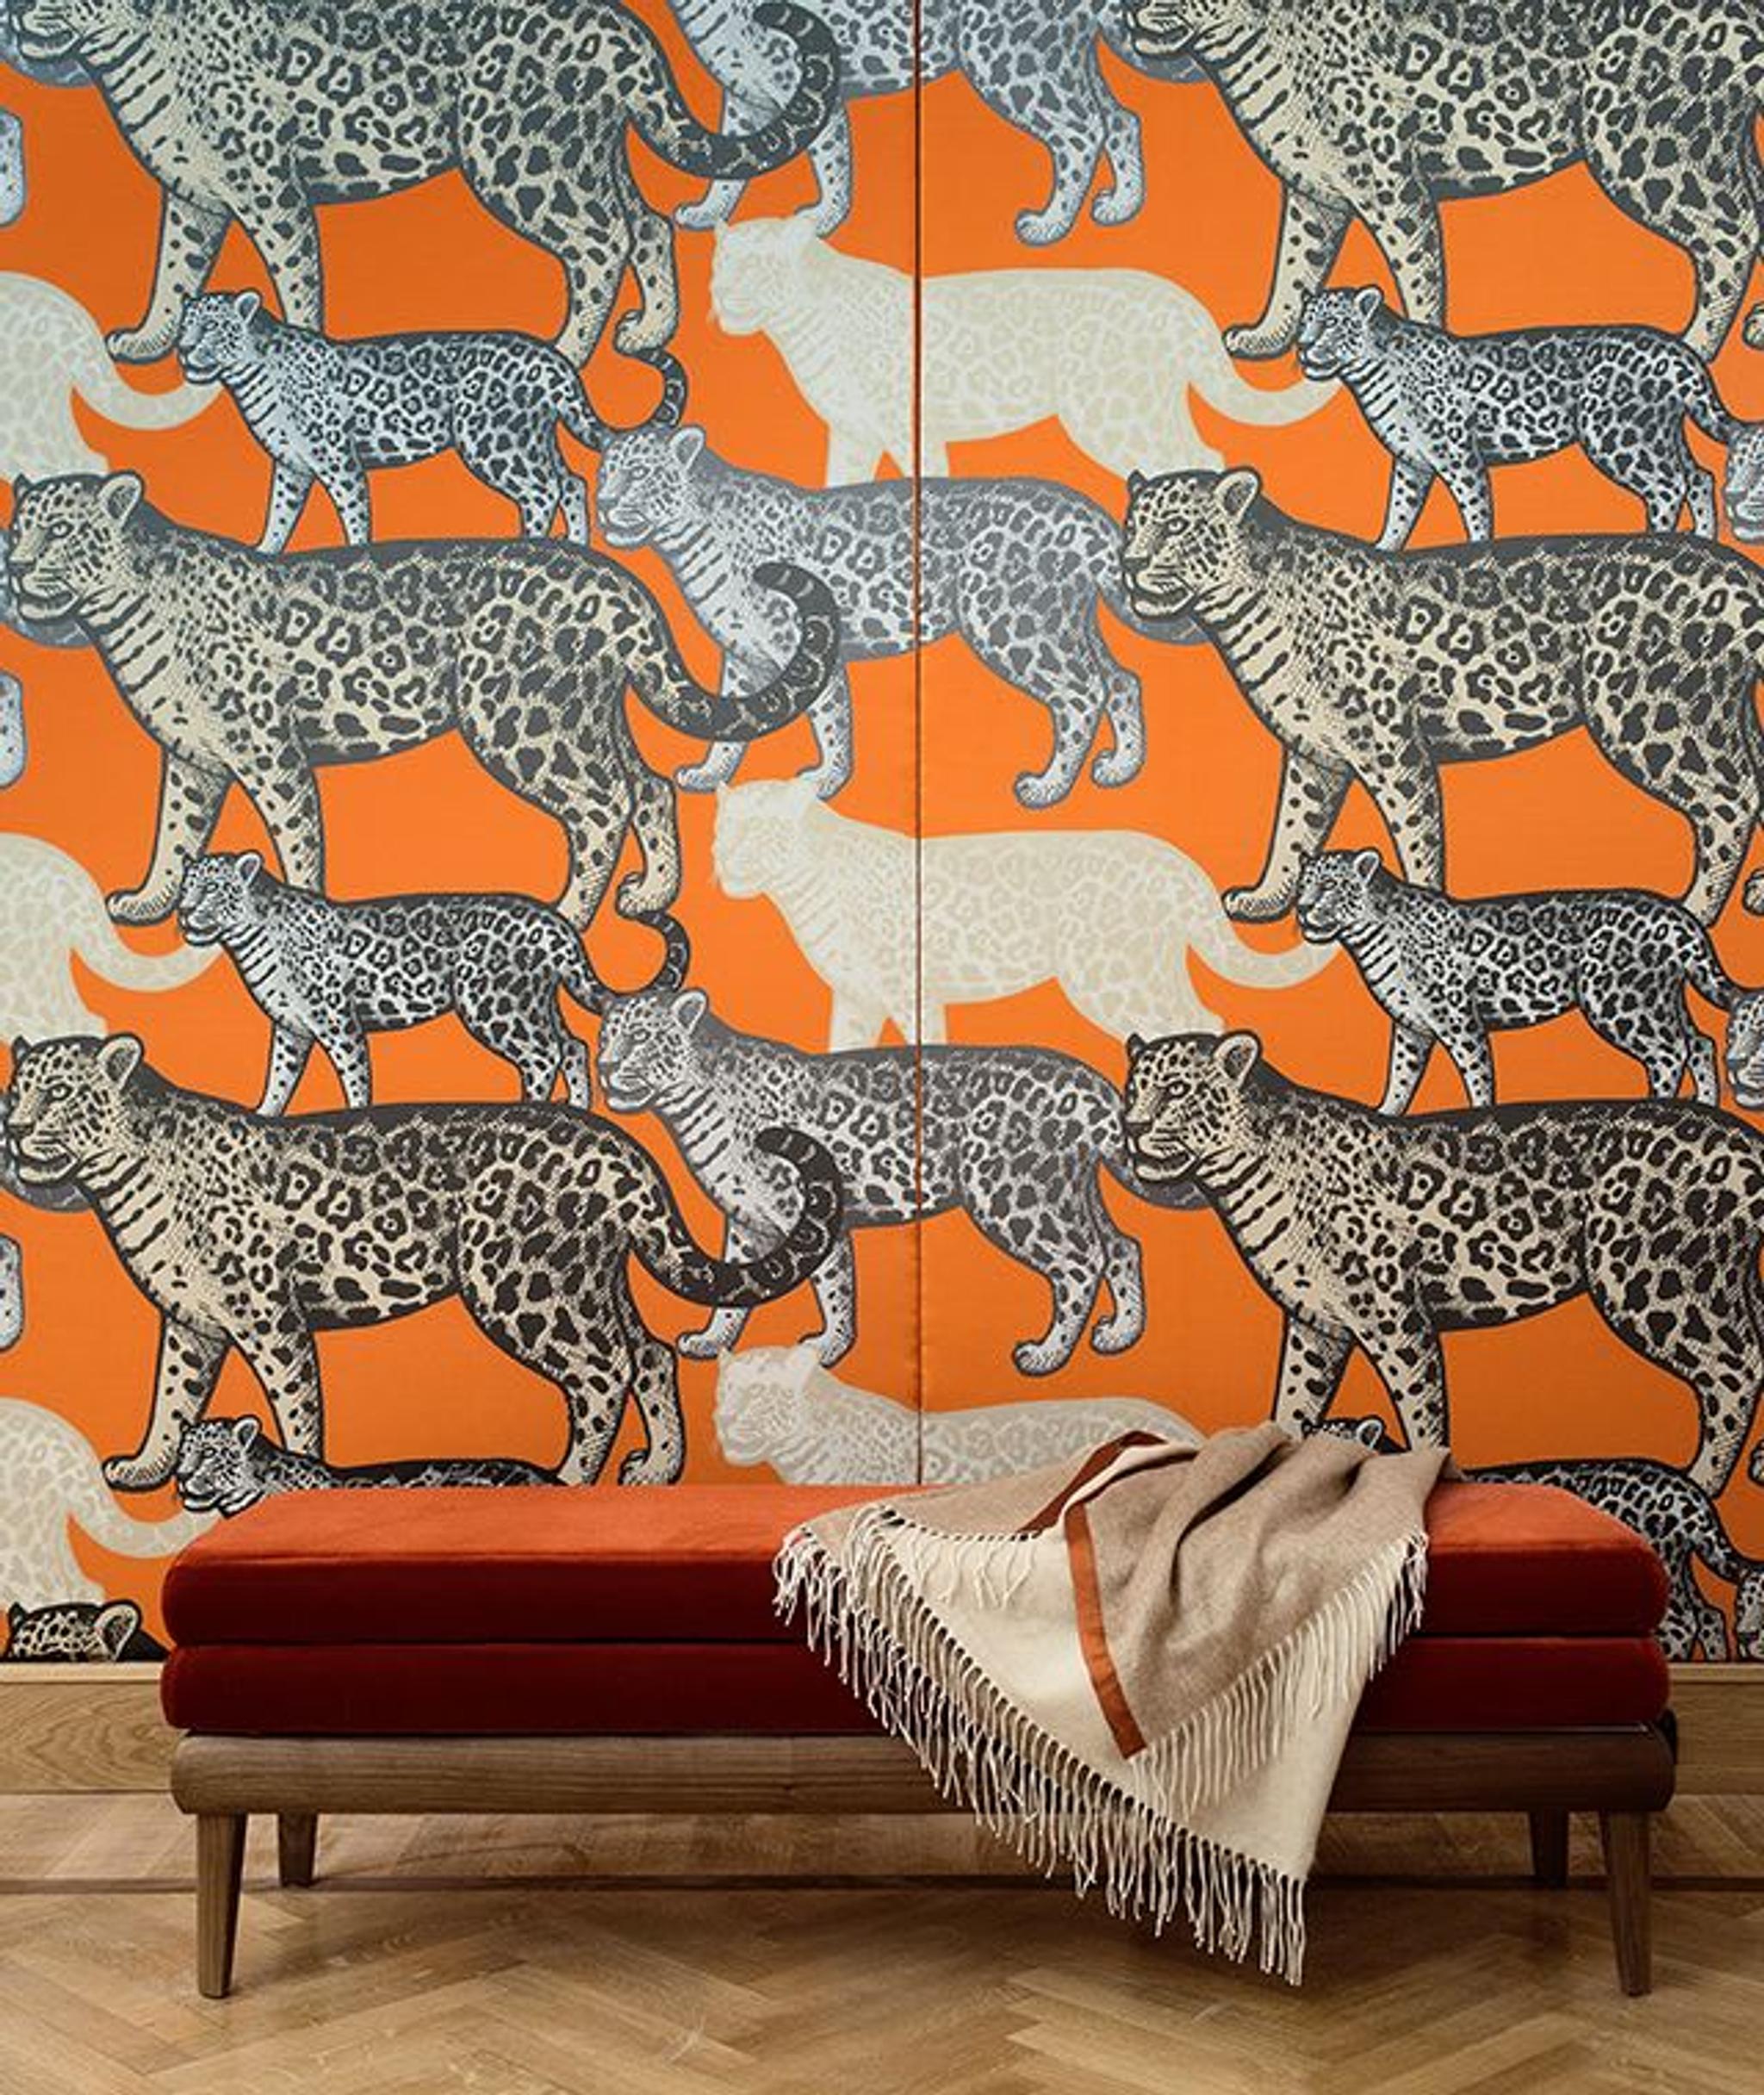 Walking Leopards Orange Panel by Midsummer Milano